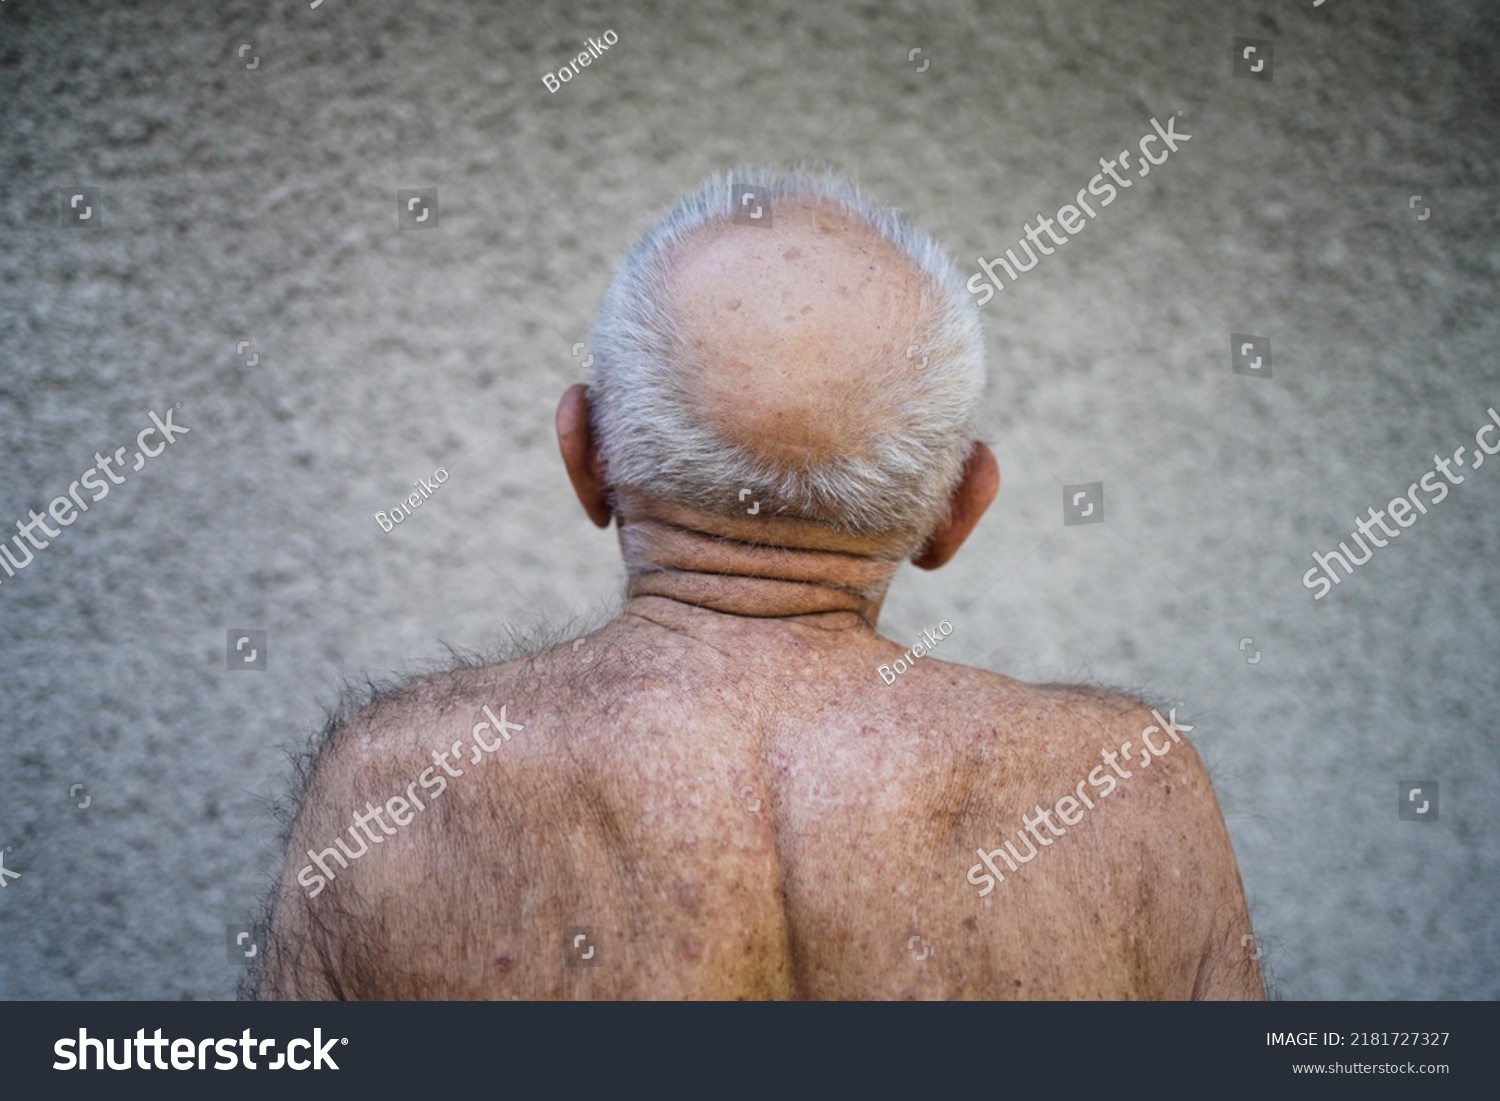 Hair Loss Men Bald Head Old Stock Photo 2181727327 Shutterstock